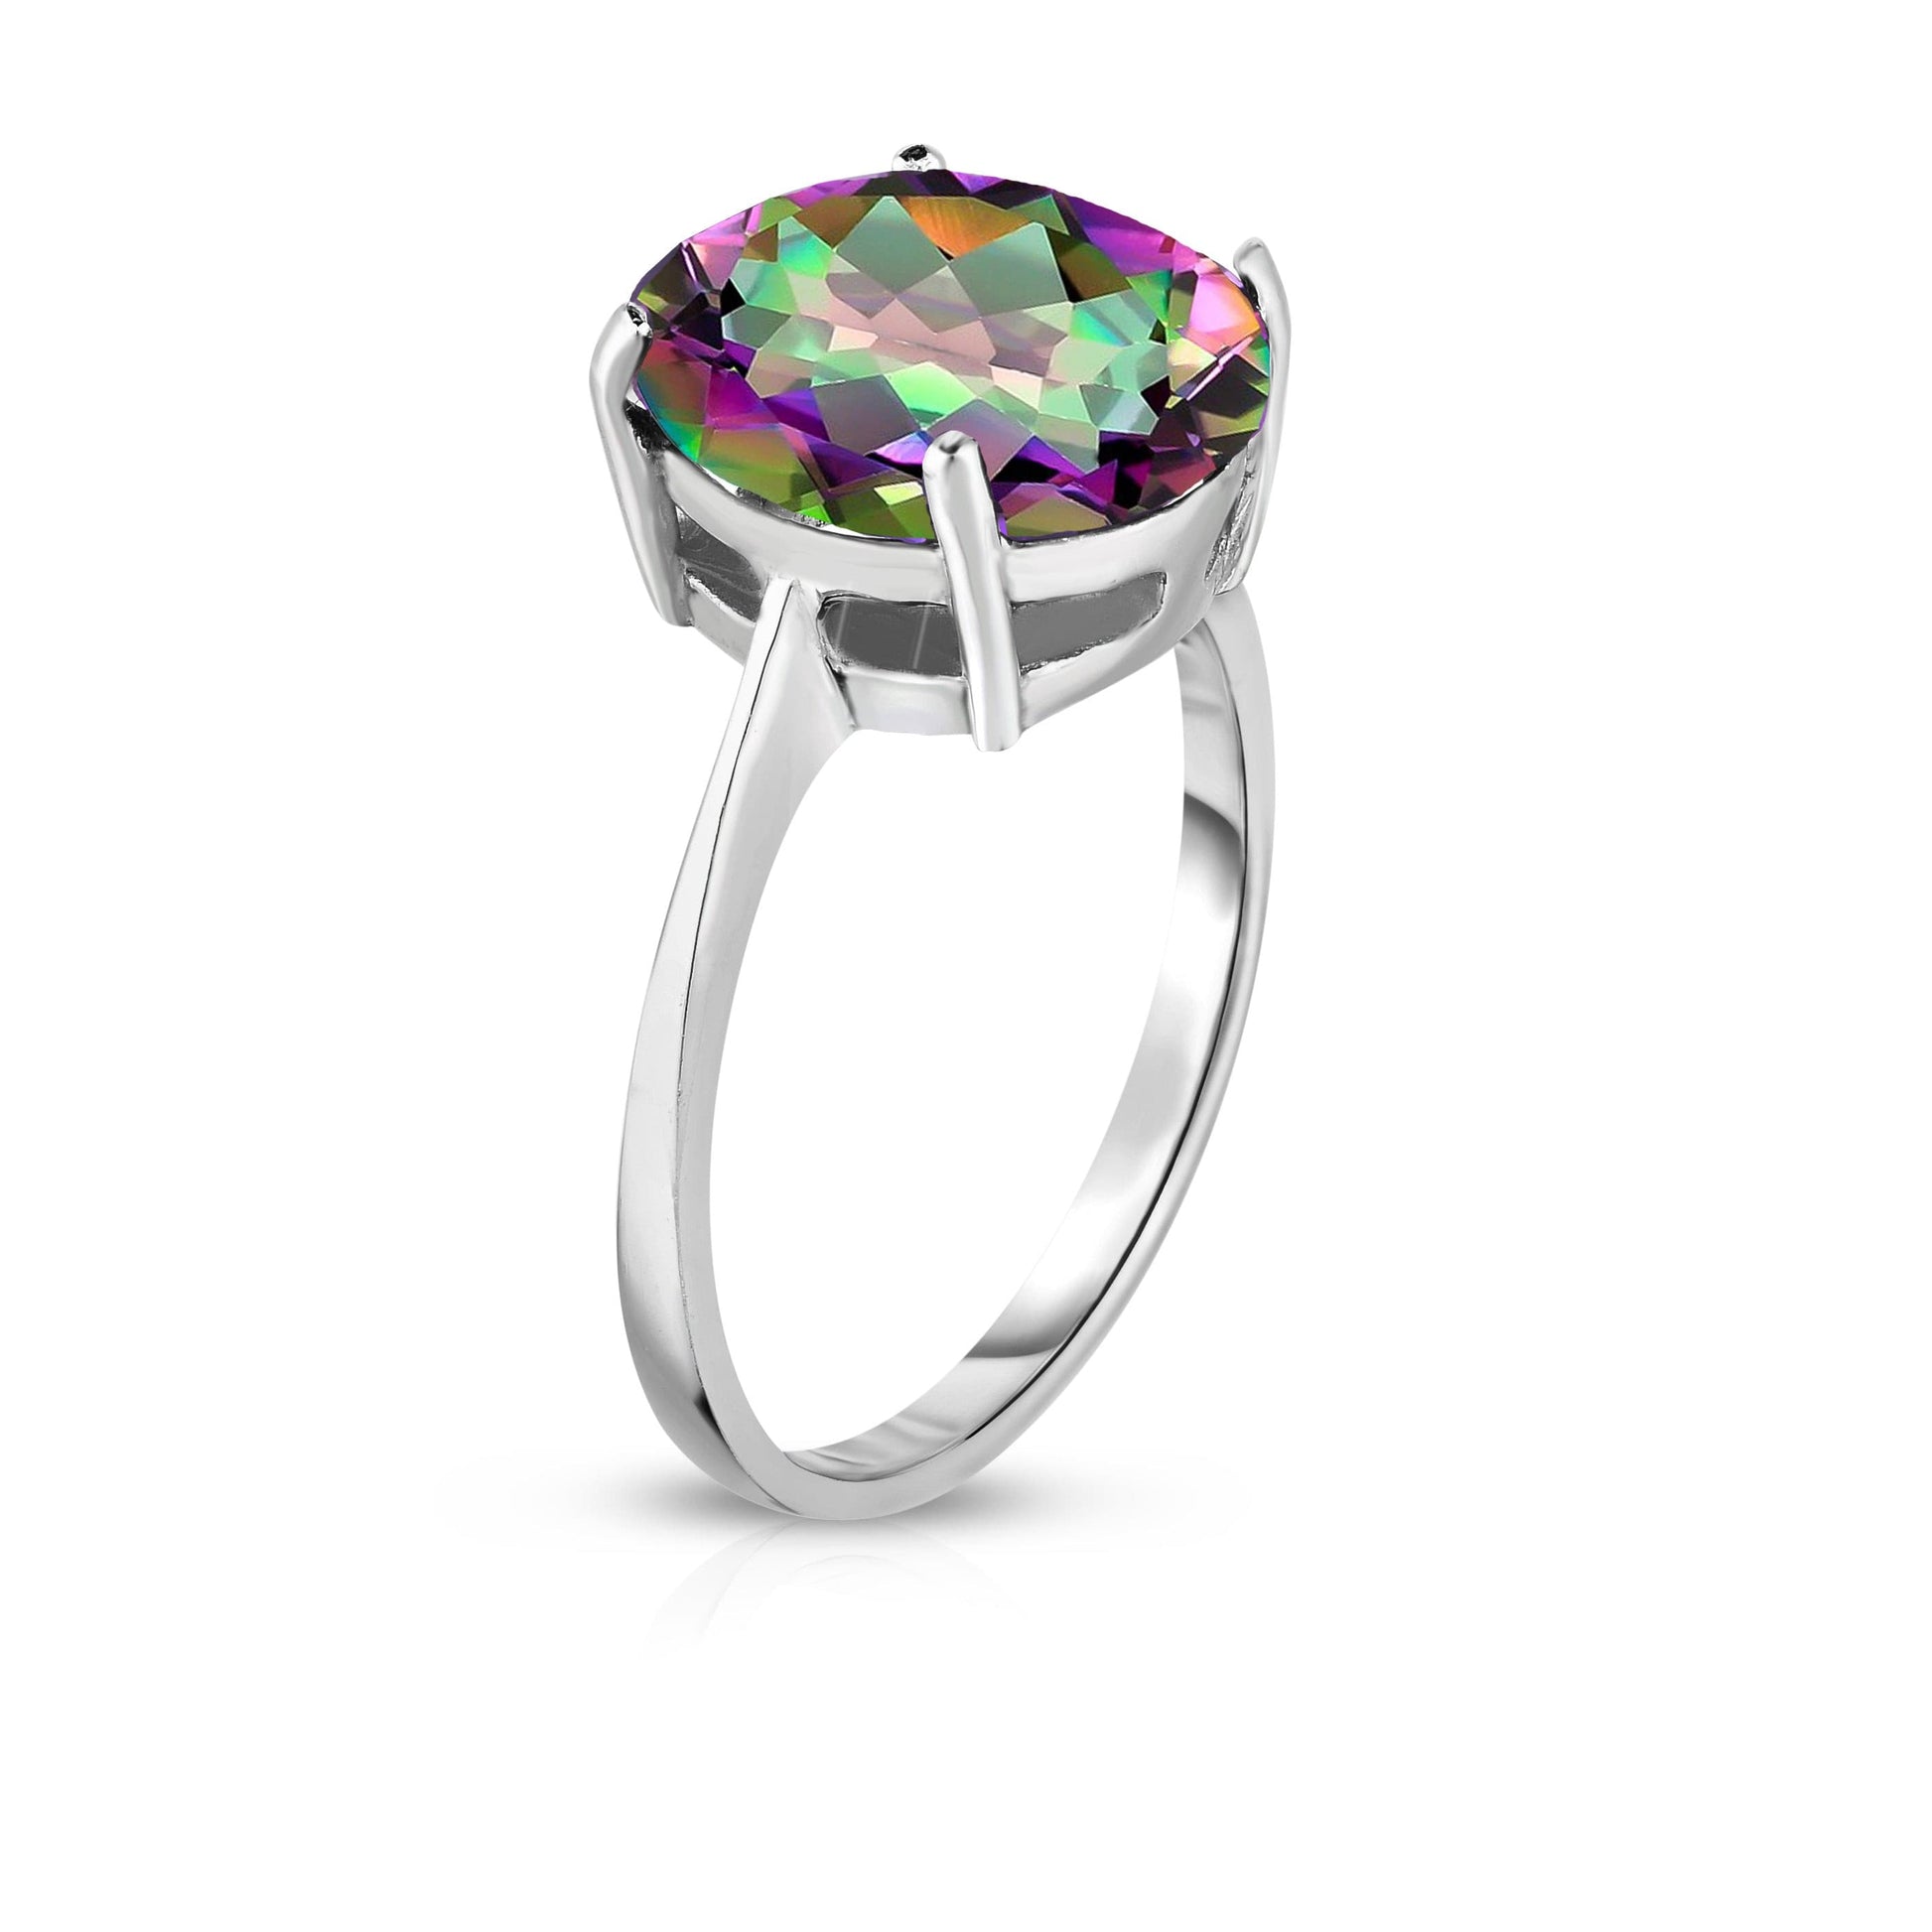 Rainbow Topaz Genuine Oval Cut Gemstone Sterling Silver Ring